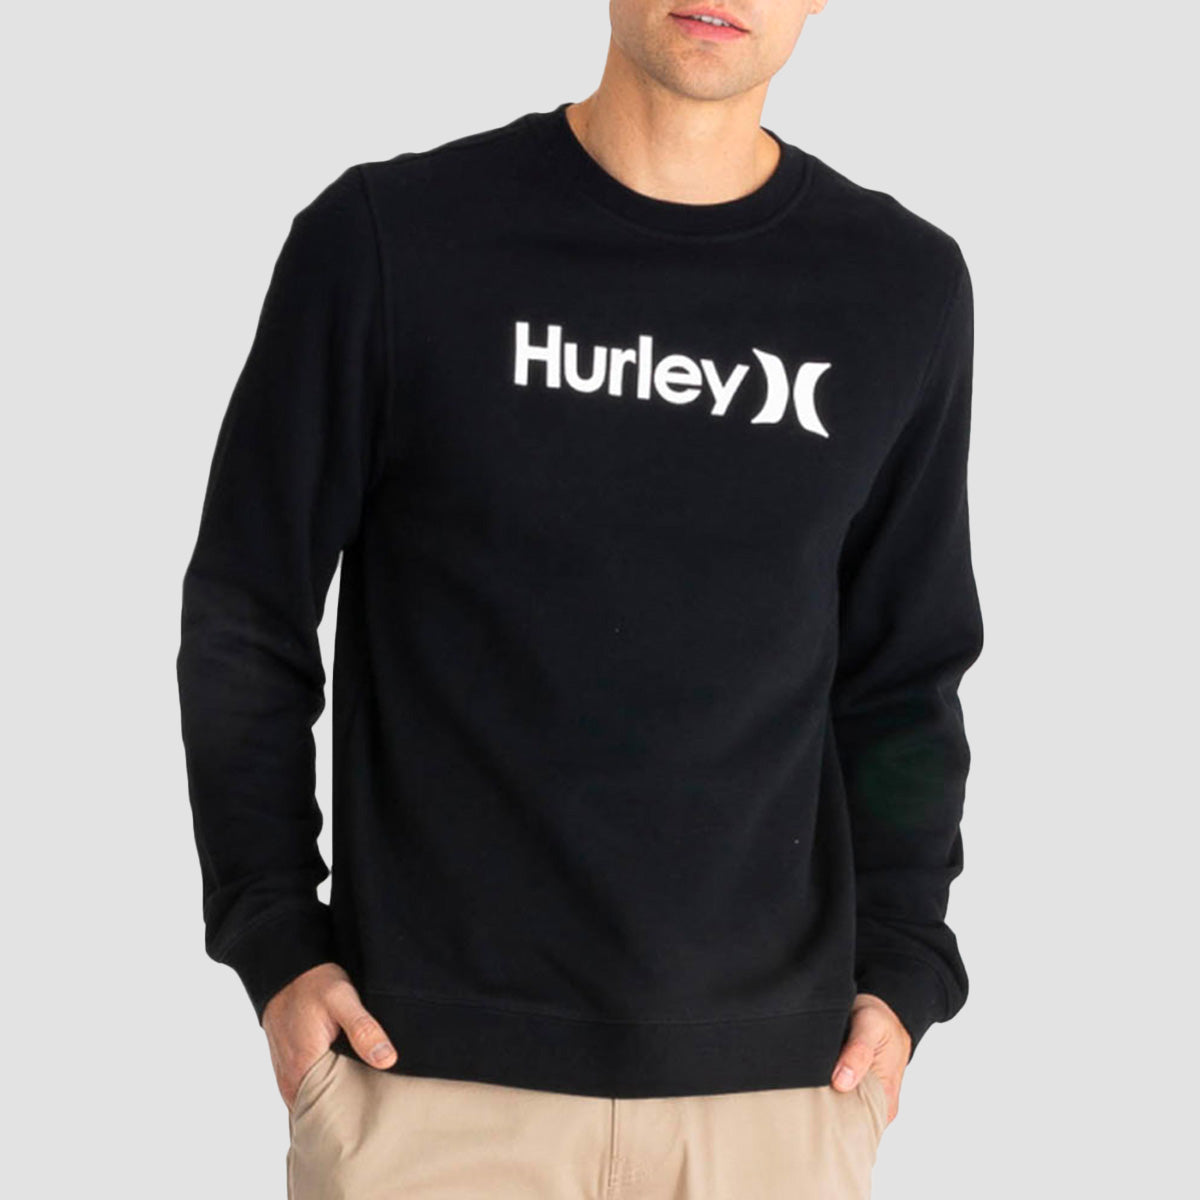 Hurley OAO Solid Crew Sweat Black/White